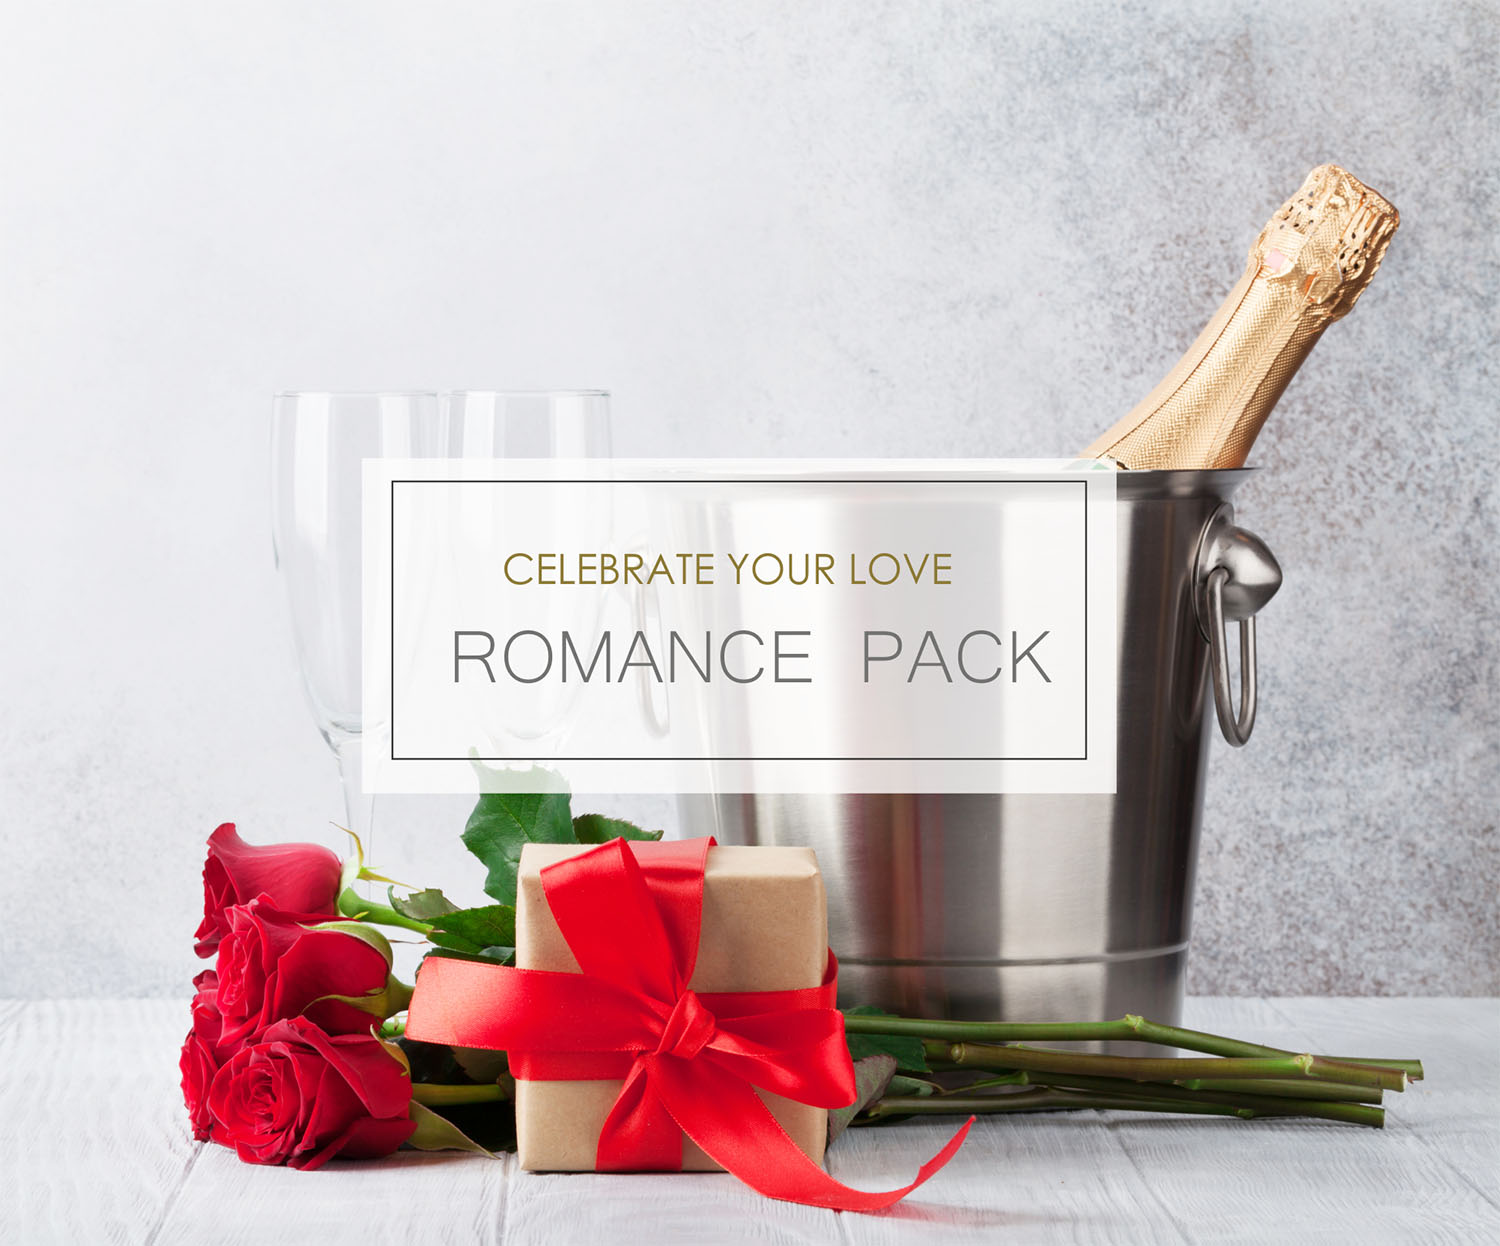 Aenos Hotel Romance Pack offer